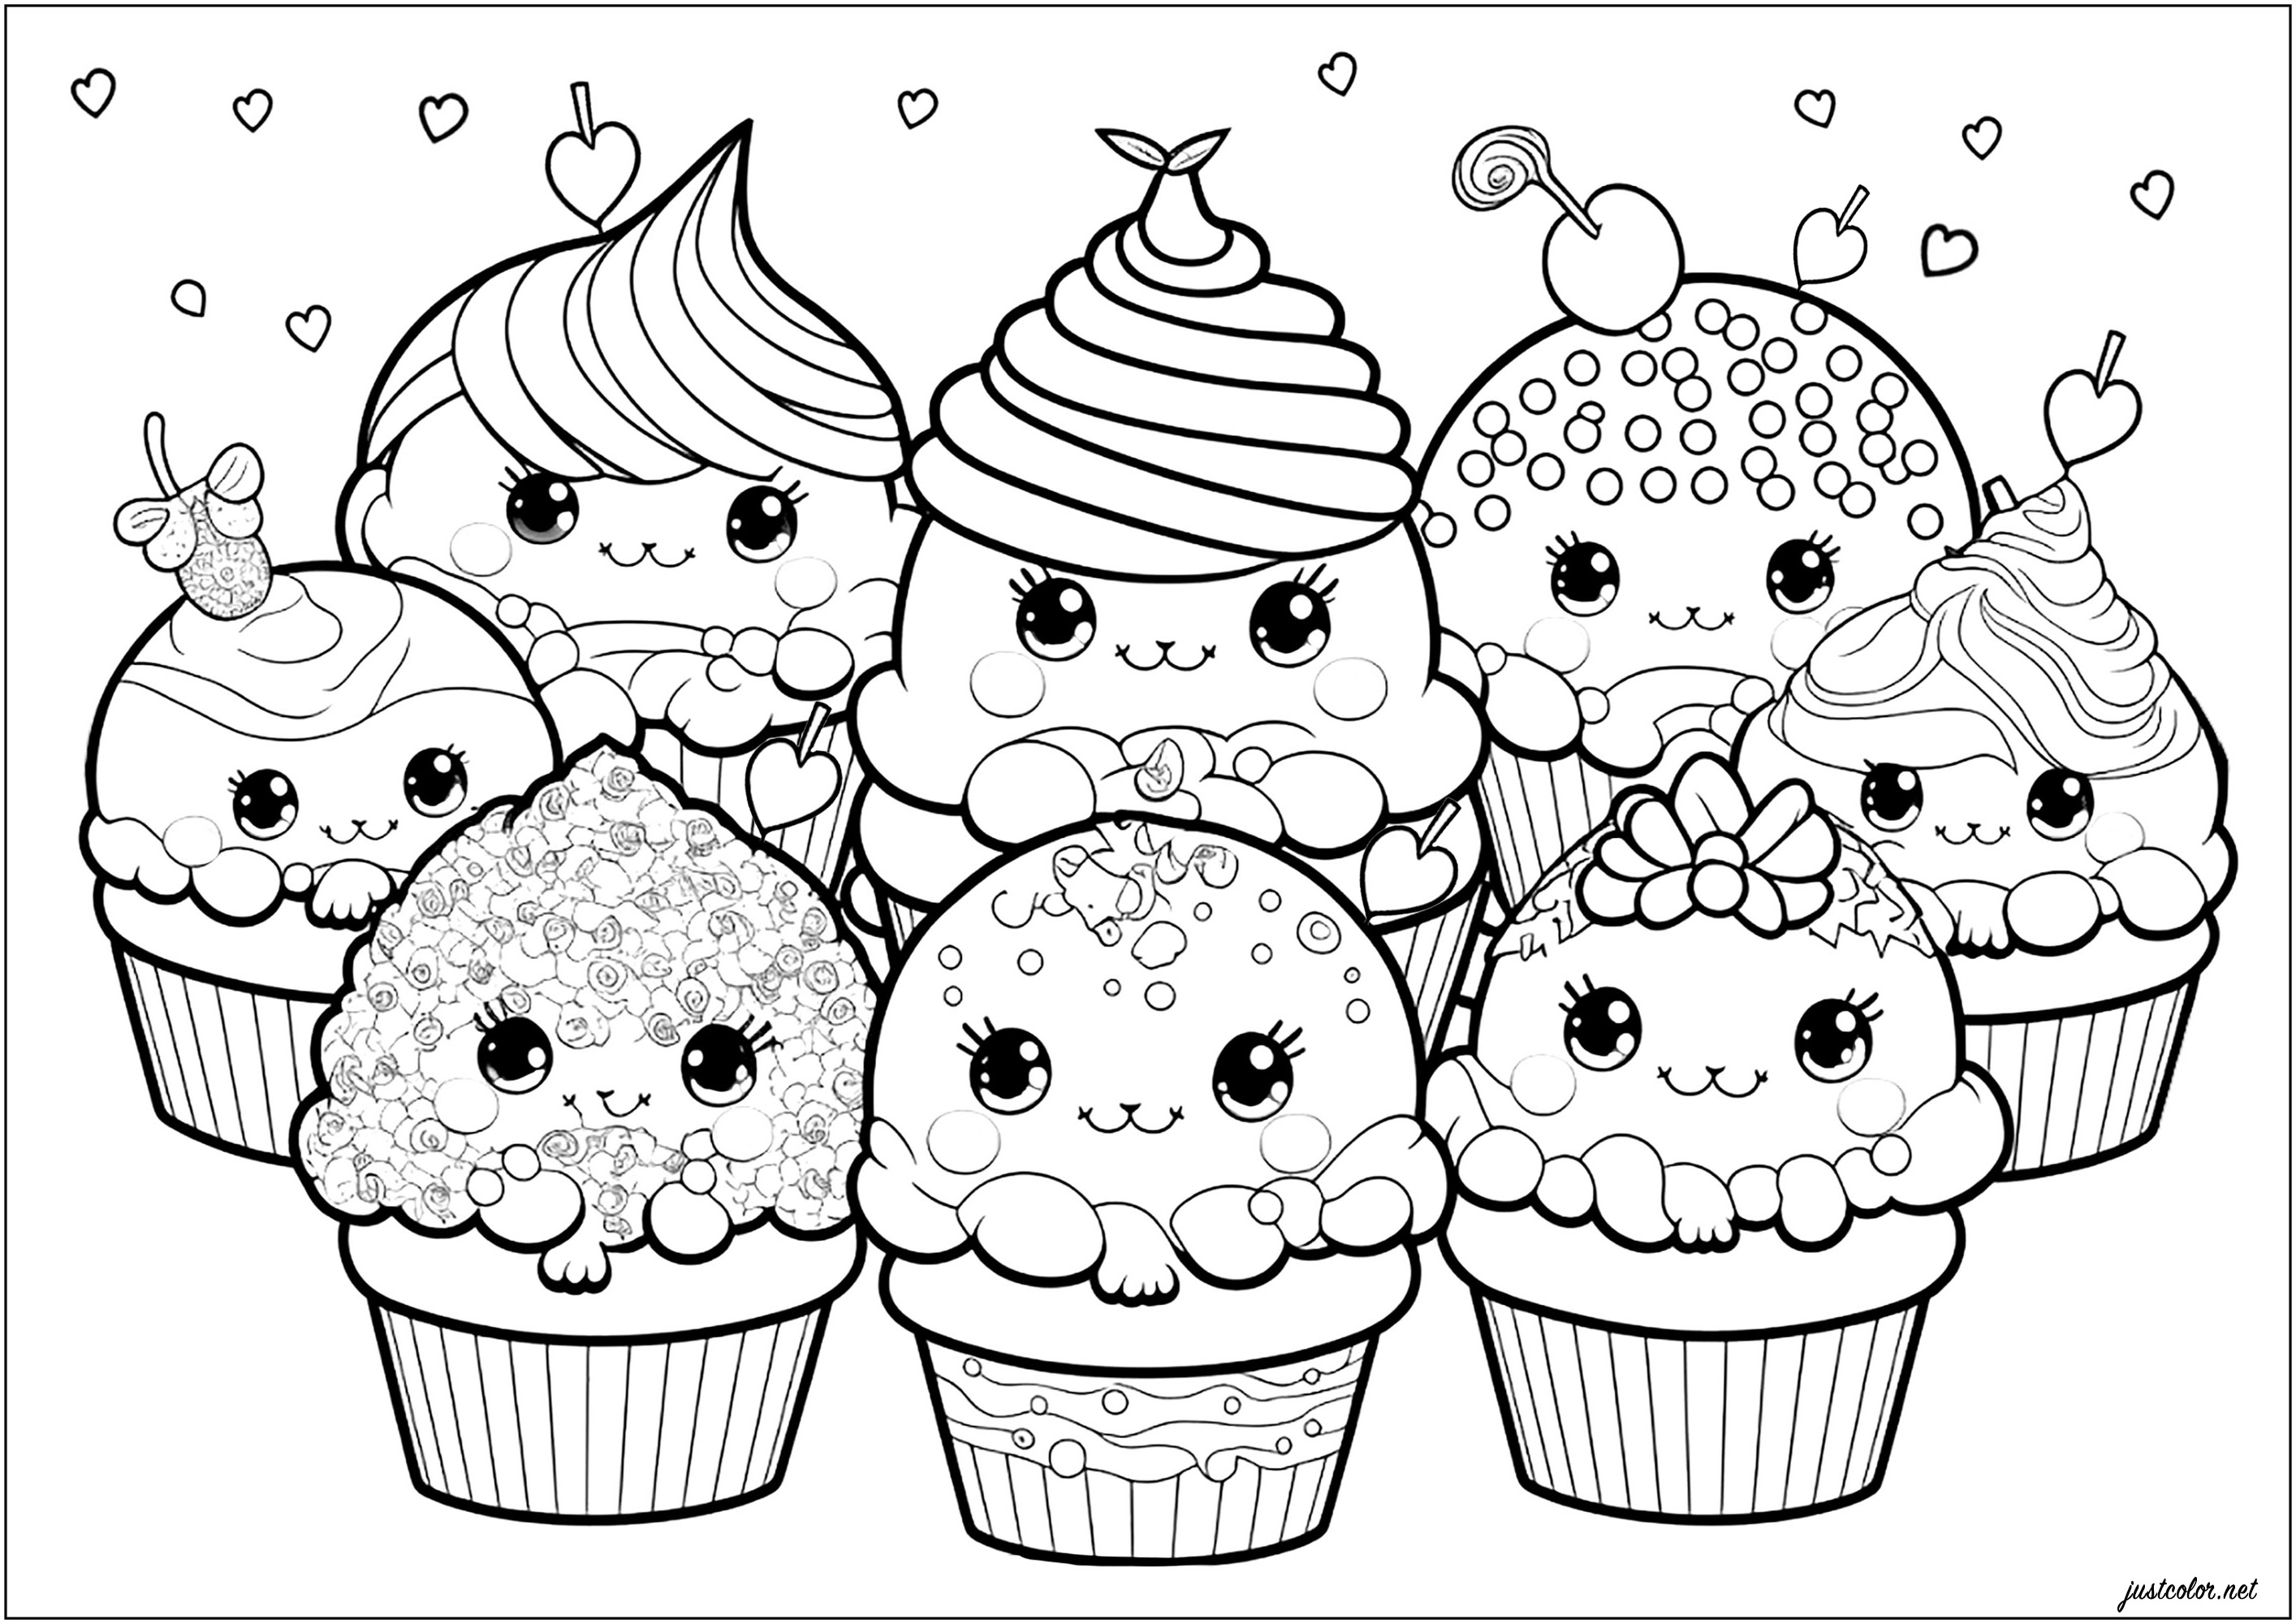 Von Kawaii-Figuren inspirierte Cupcakes